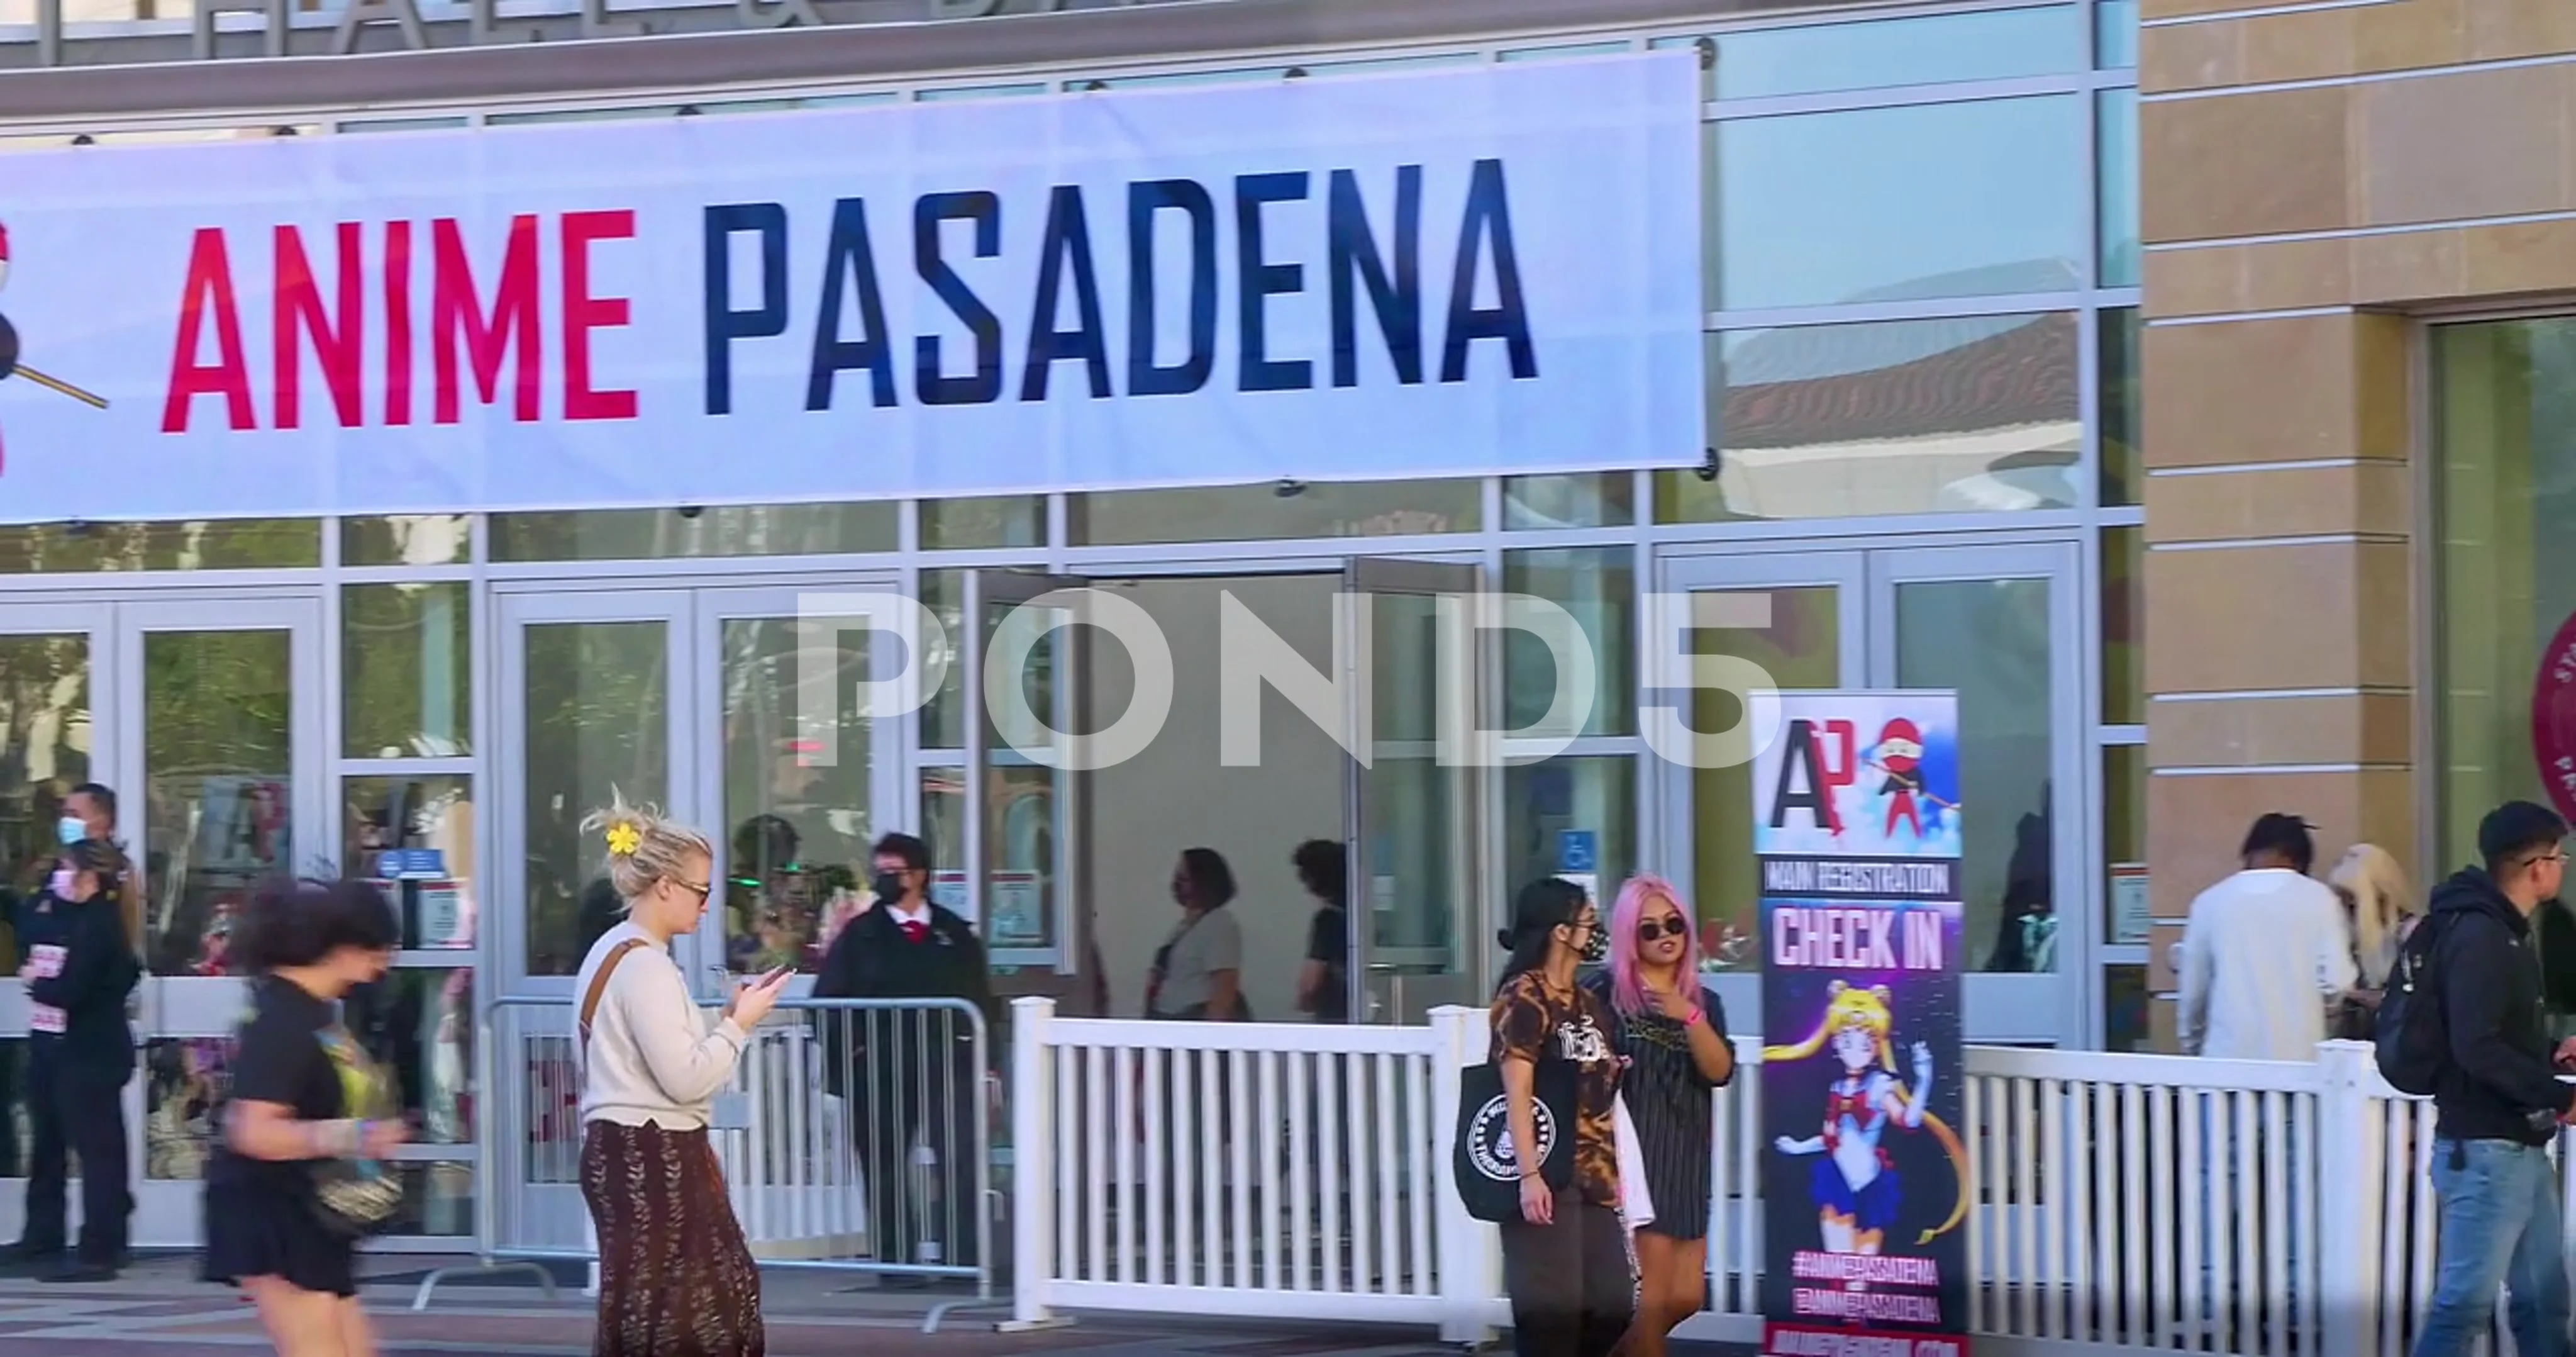 AnimeVerse Fest: Pasadena, Tx Tickets at Pasadena Event Center Texas in  Pasadena by Anime Verse Fest | Tixr